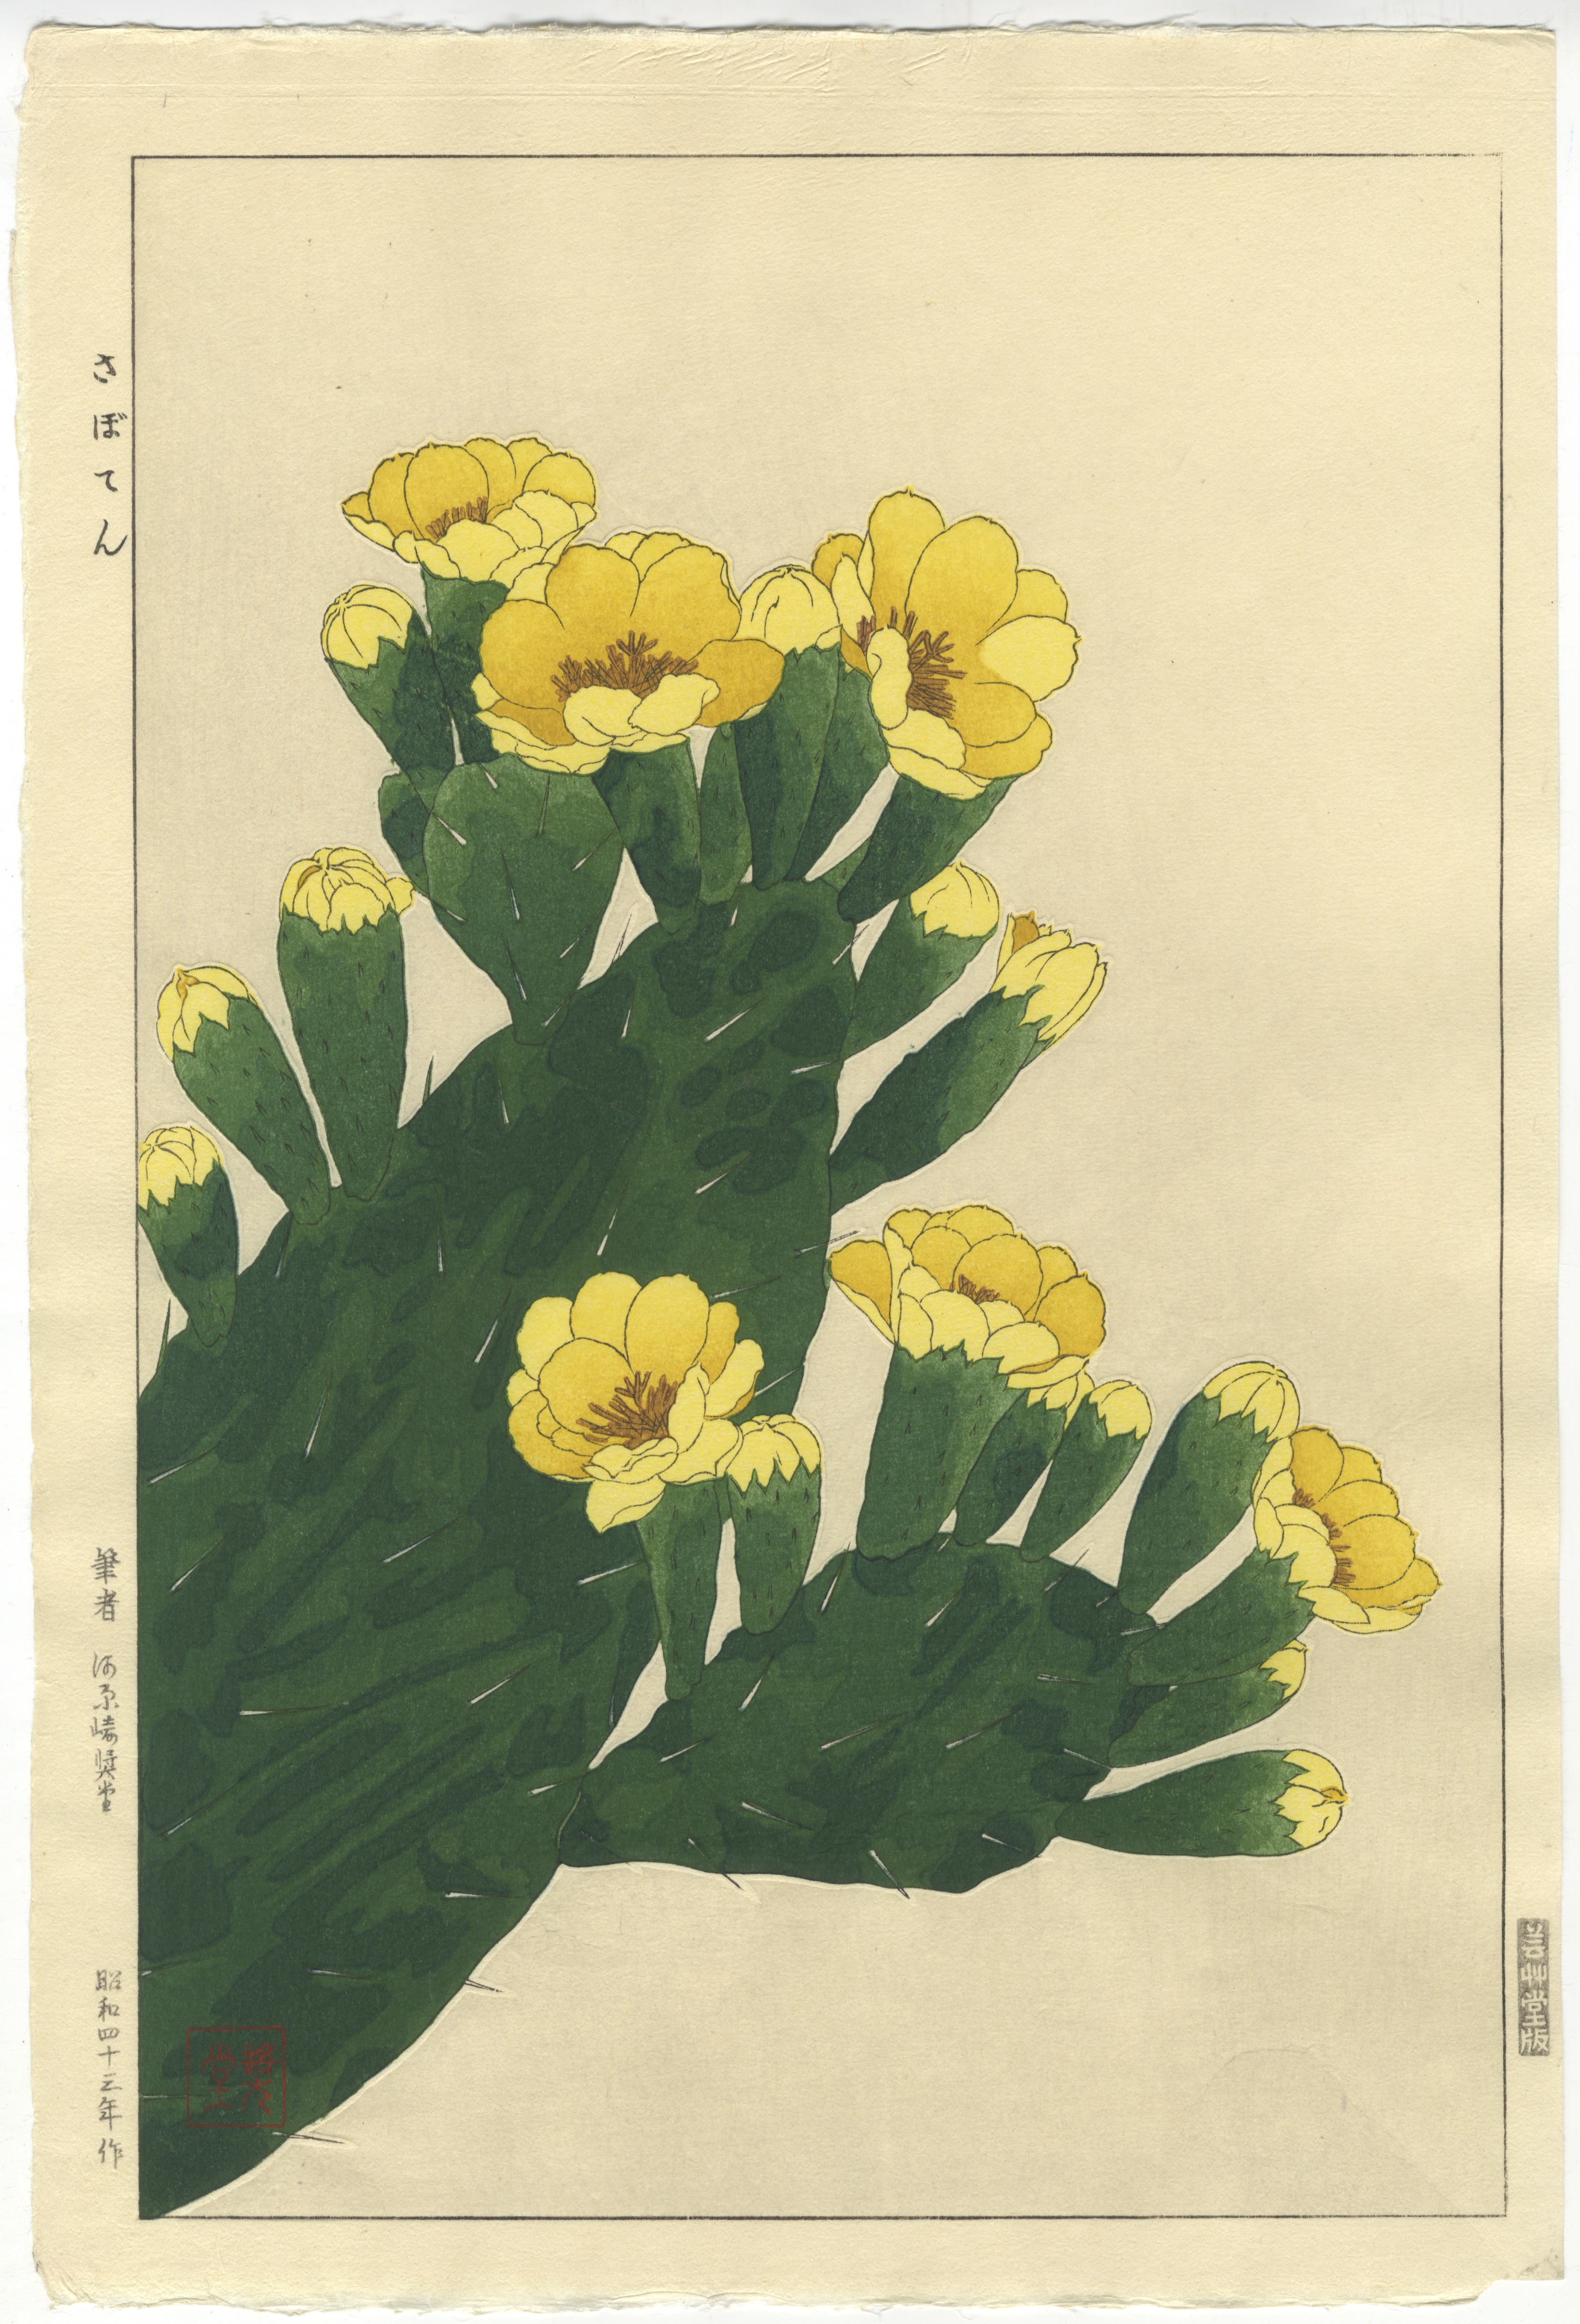 Shodo Kawarazaki, Cactus, Japanese Woodblock Print